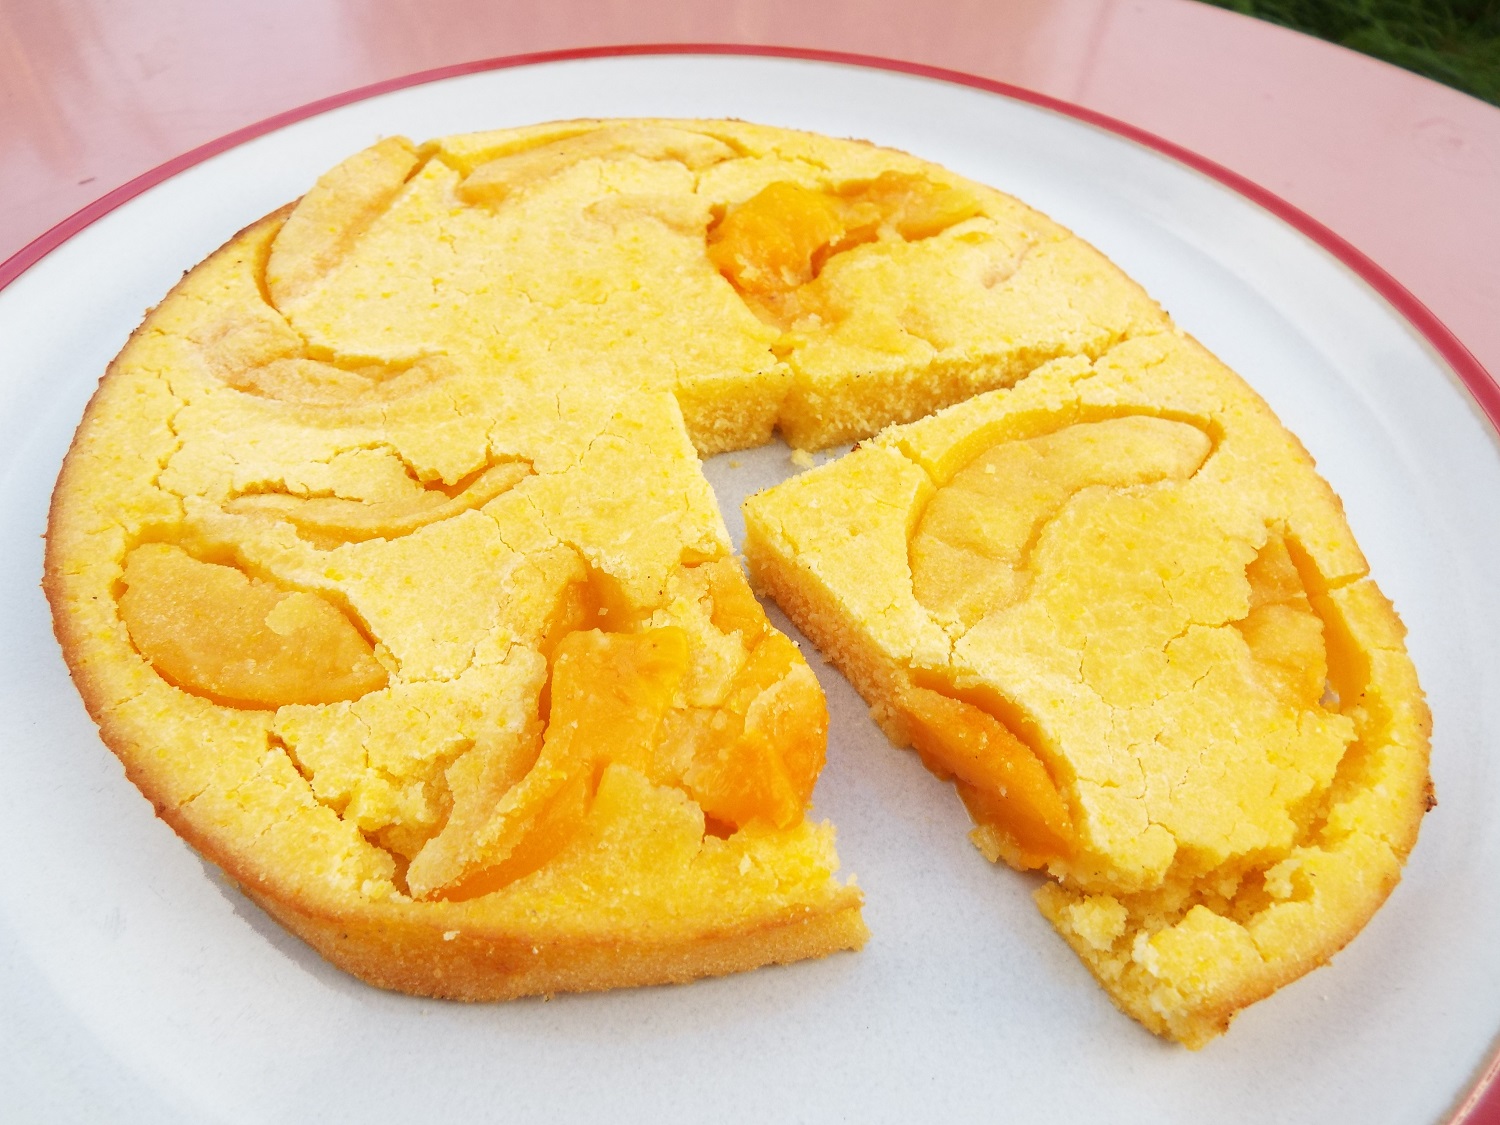 Cornmeal cake with peaches